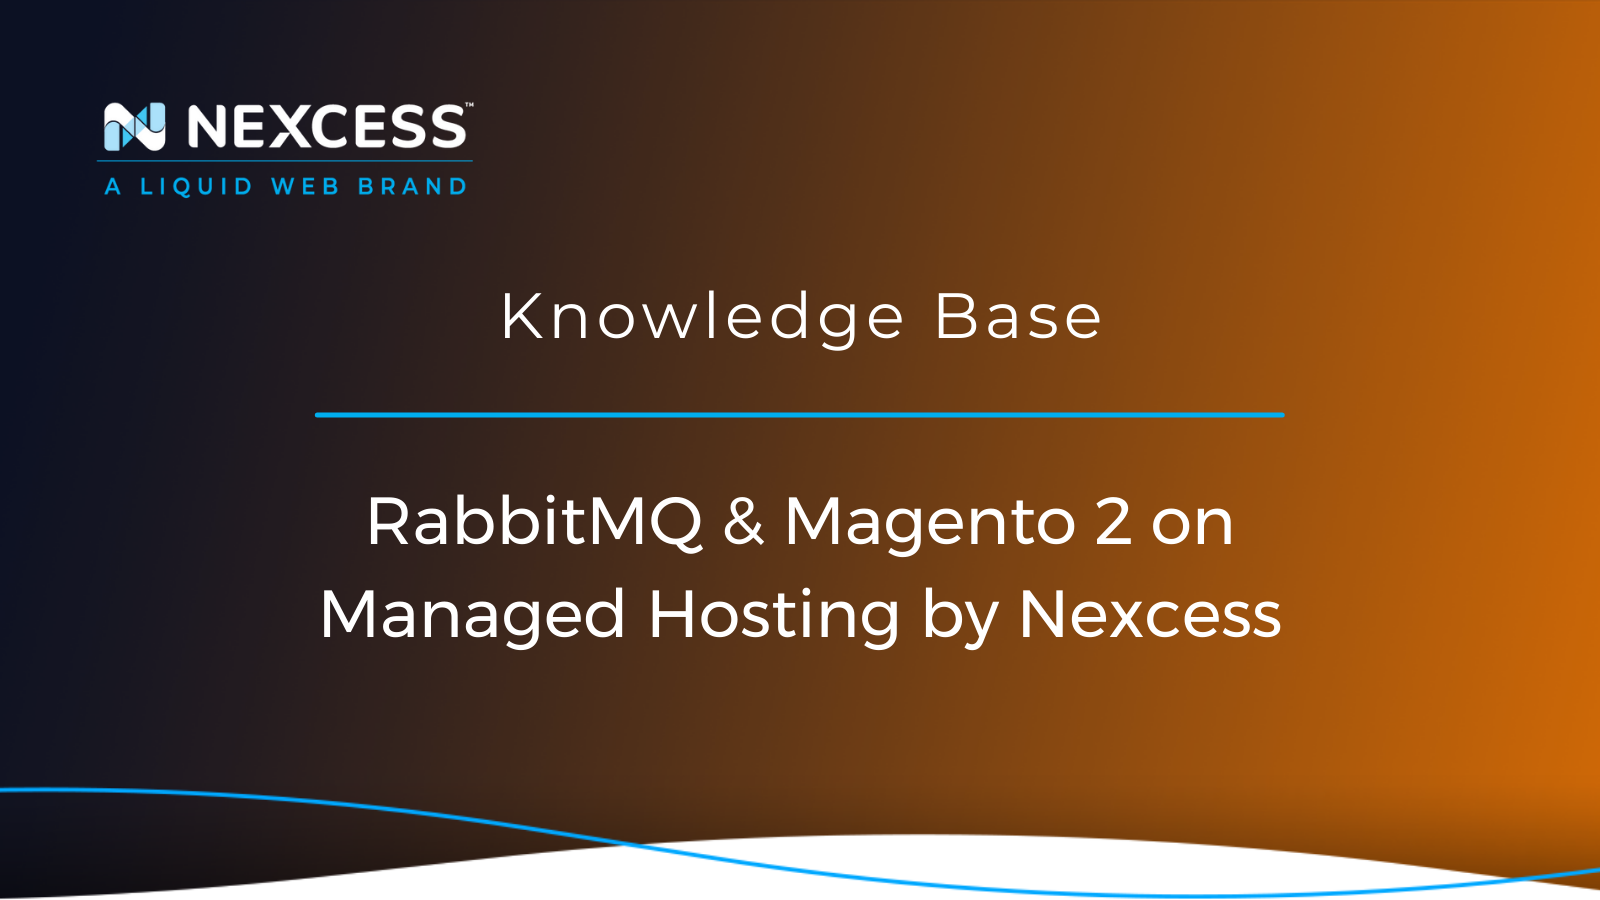 RabbitMQ & Magento 2 on Managed Hosting by Nexcess